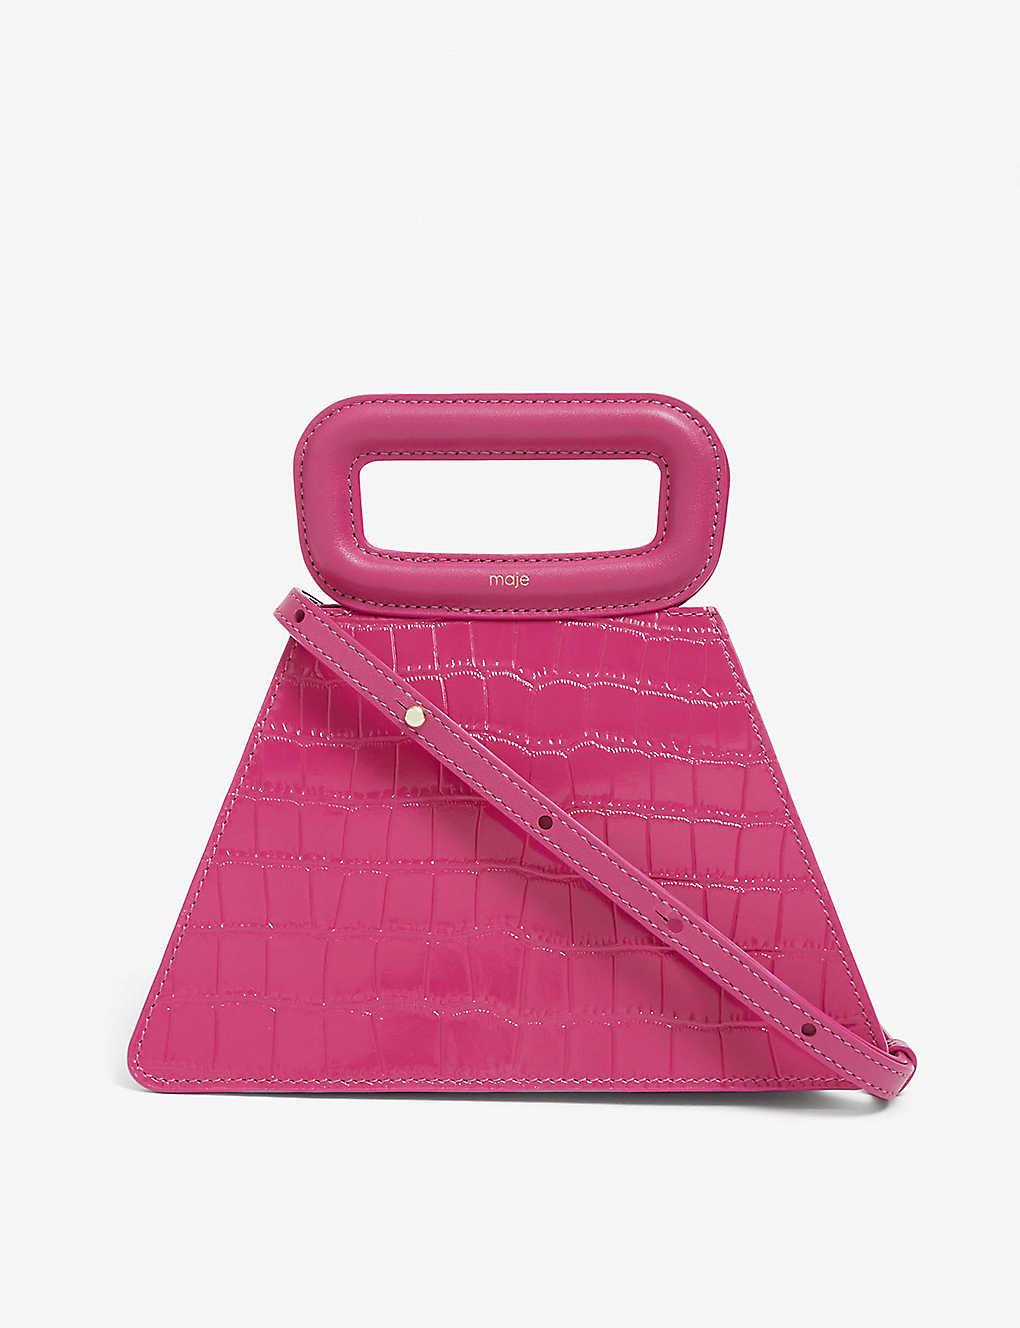 Maje Croc-embossed Tote Bag in Pink | Lyst